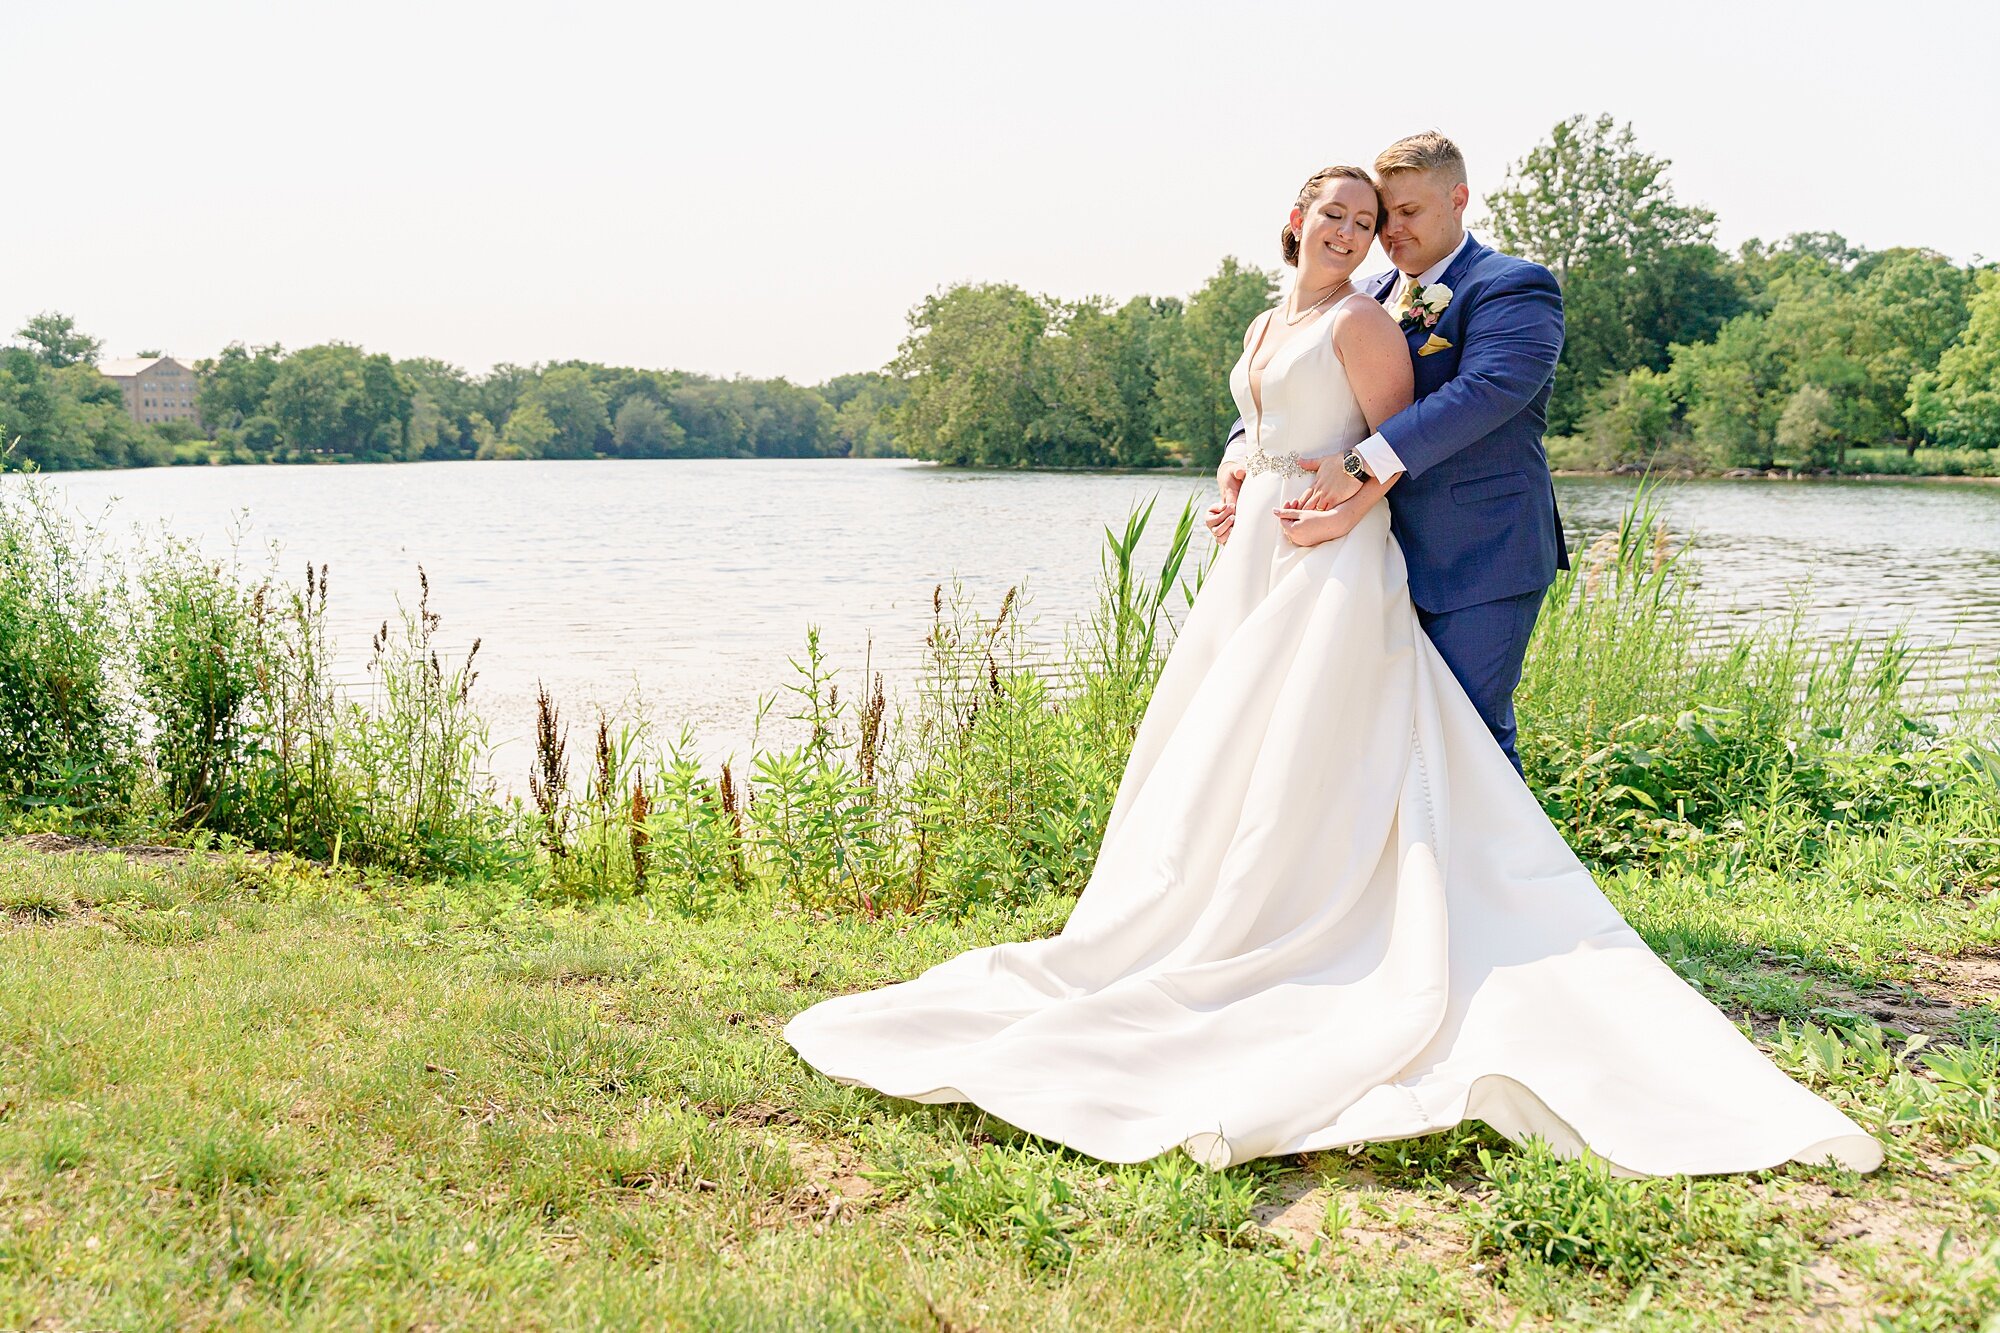 086-Jane-Nate-Katie-Whitcomb-Photography-classic-elegant-University-Notre-Dame-st-marys-lake-bride-groom-portraits-wedding.jpg